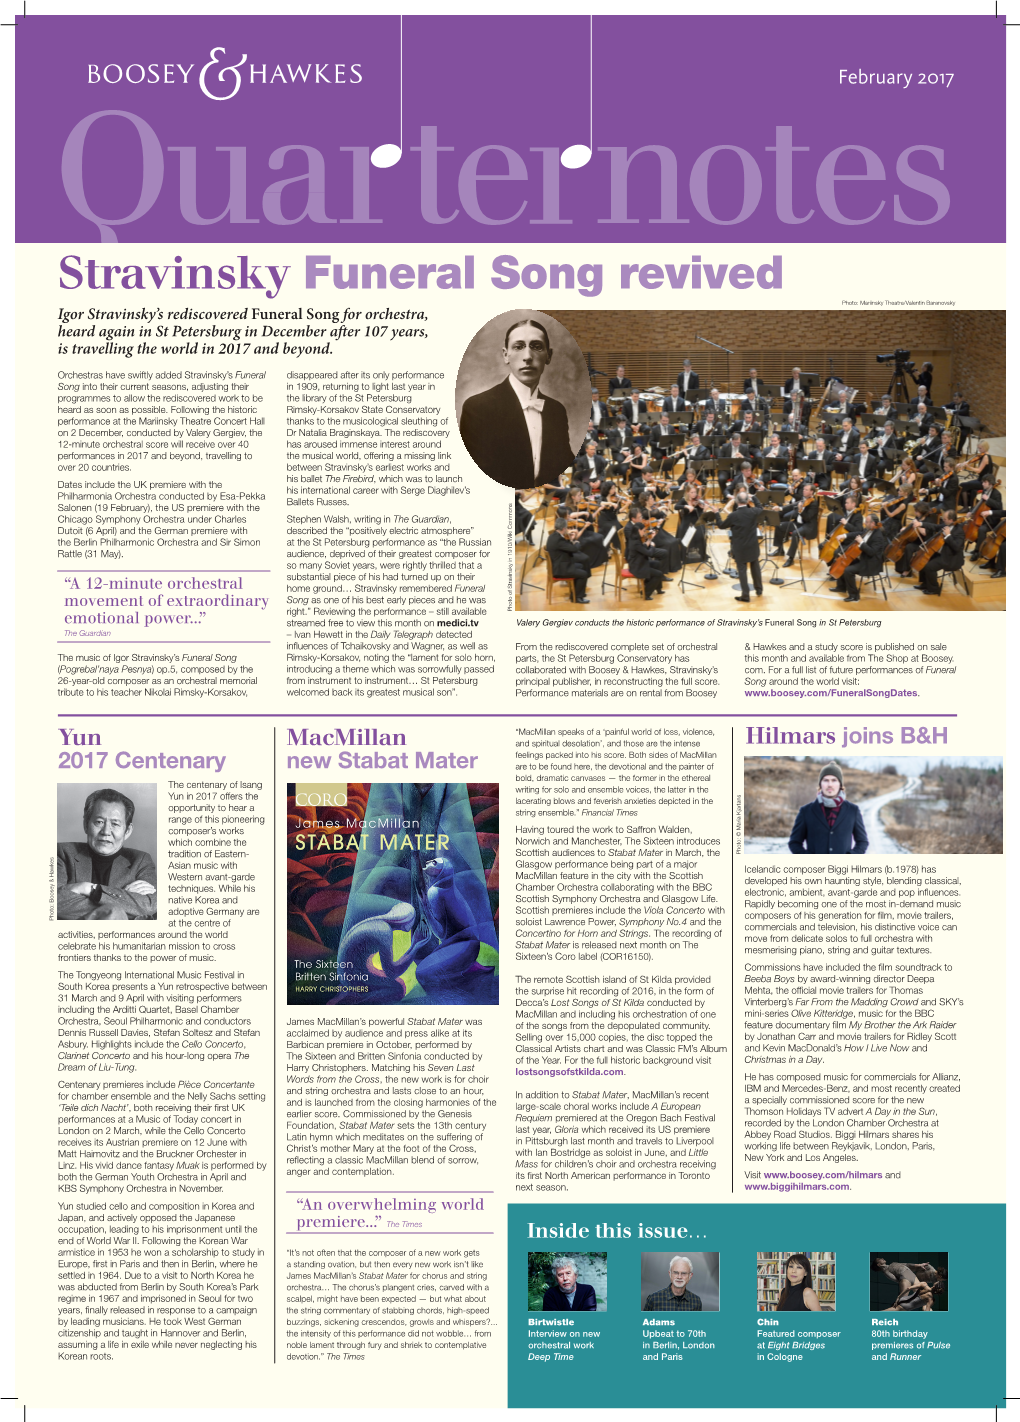 Stravinsky Funeral Song Revived